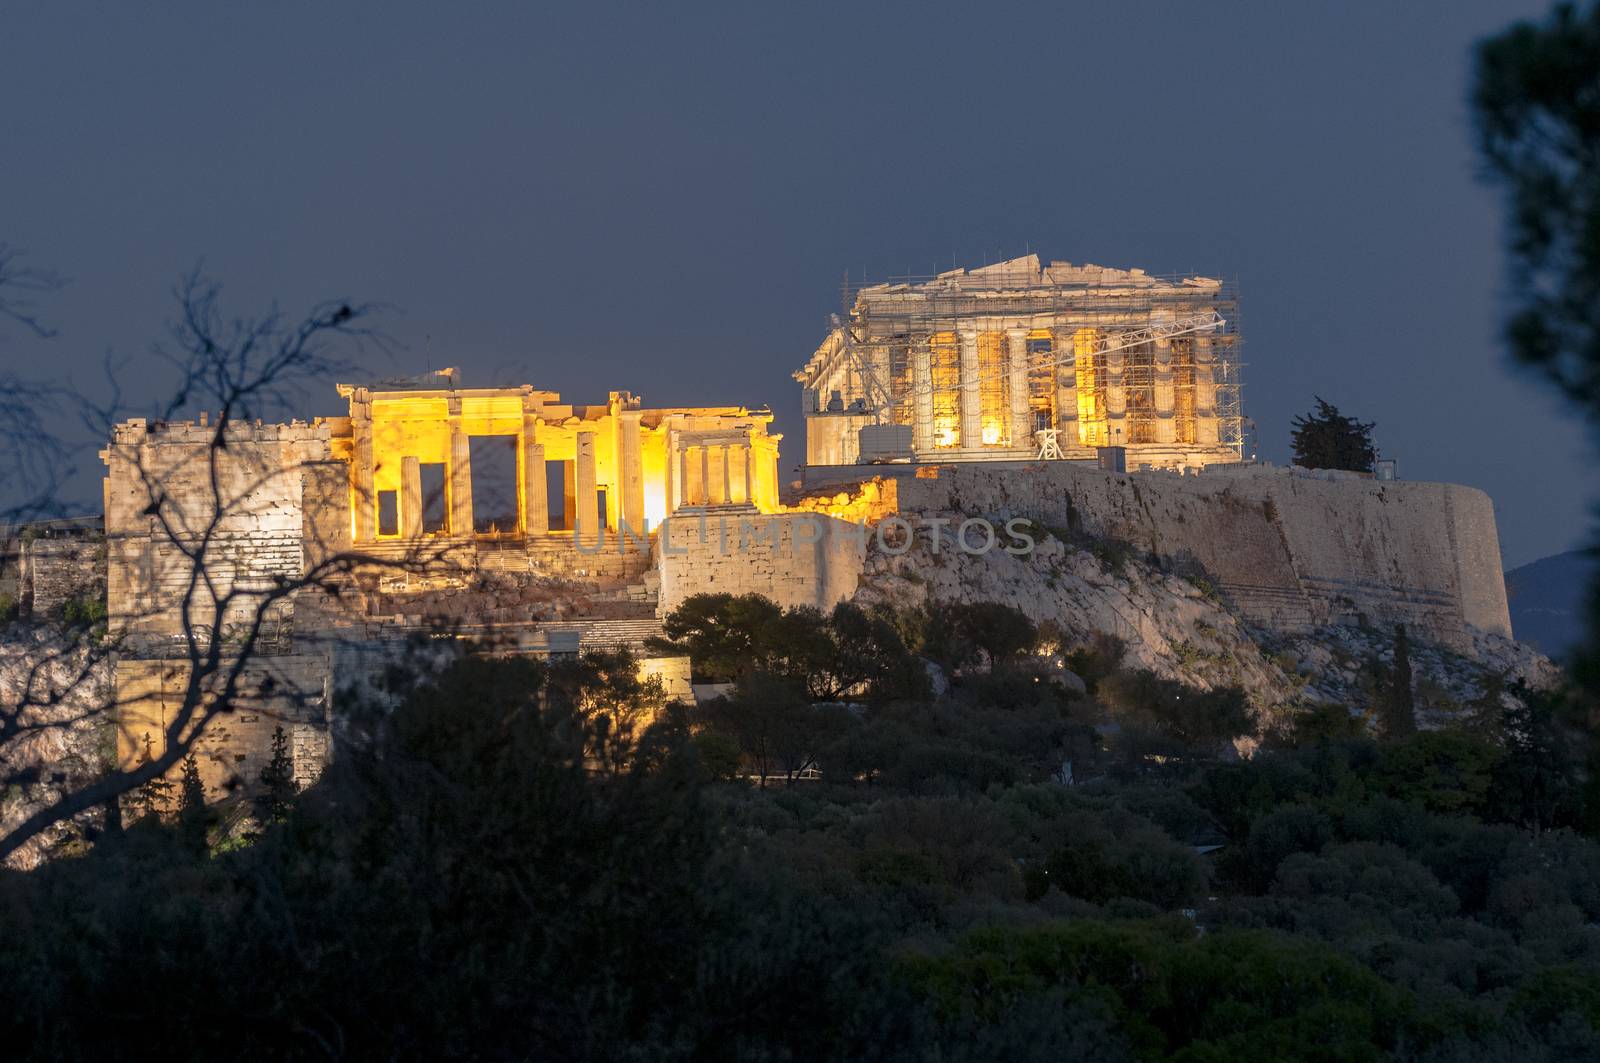 acropolis little before nightfall